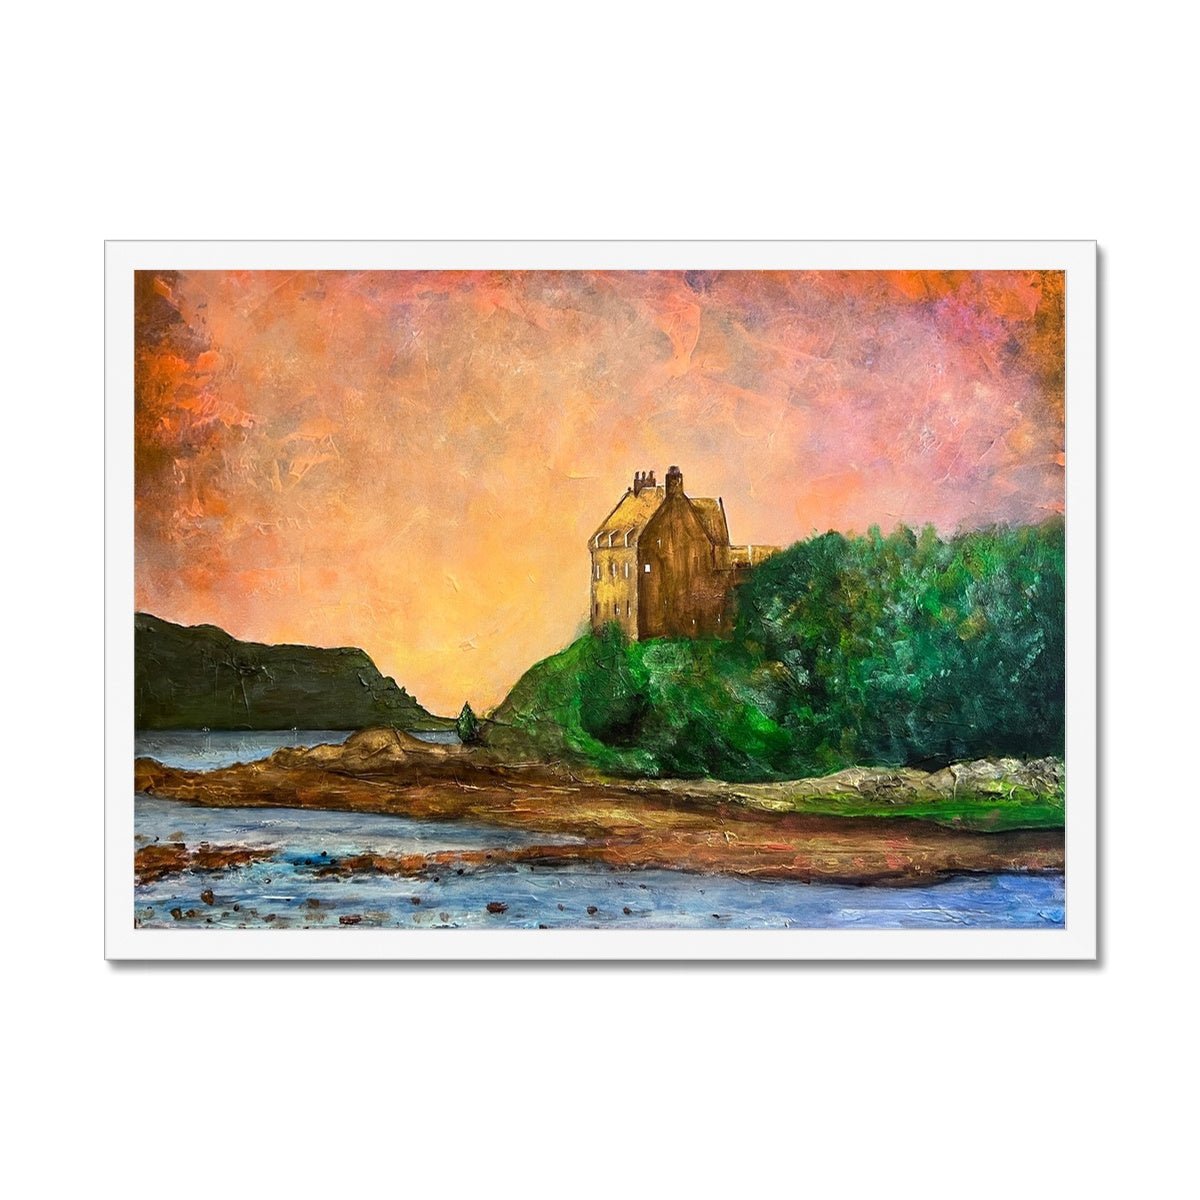 Duntrune Castle Painting | Framed Prints From Scotland-Framed Prints-Scottish Castles Art Gallery-A2 Landscape-White Frame-Paintings, Prints, Homeware, Art Gifts From Scotland By Scottish Artist Kevin Hunter